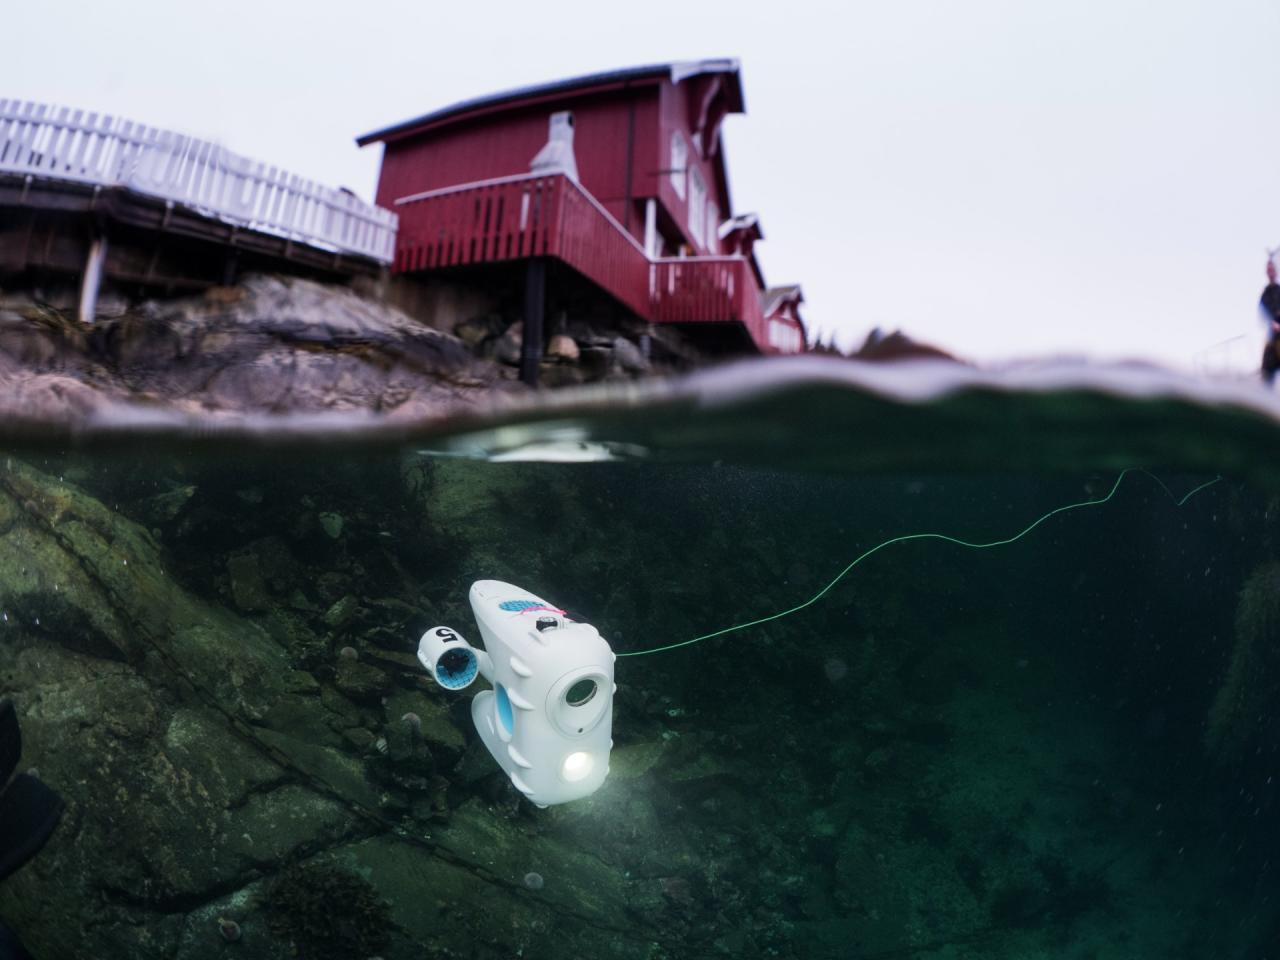 PioneerOne drone exploring the harbour of Kvenvær, in clear winter water